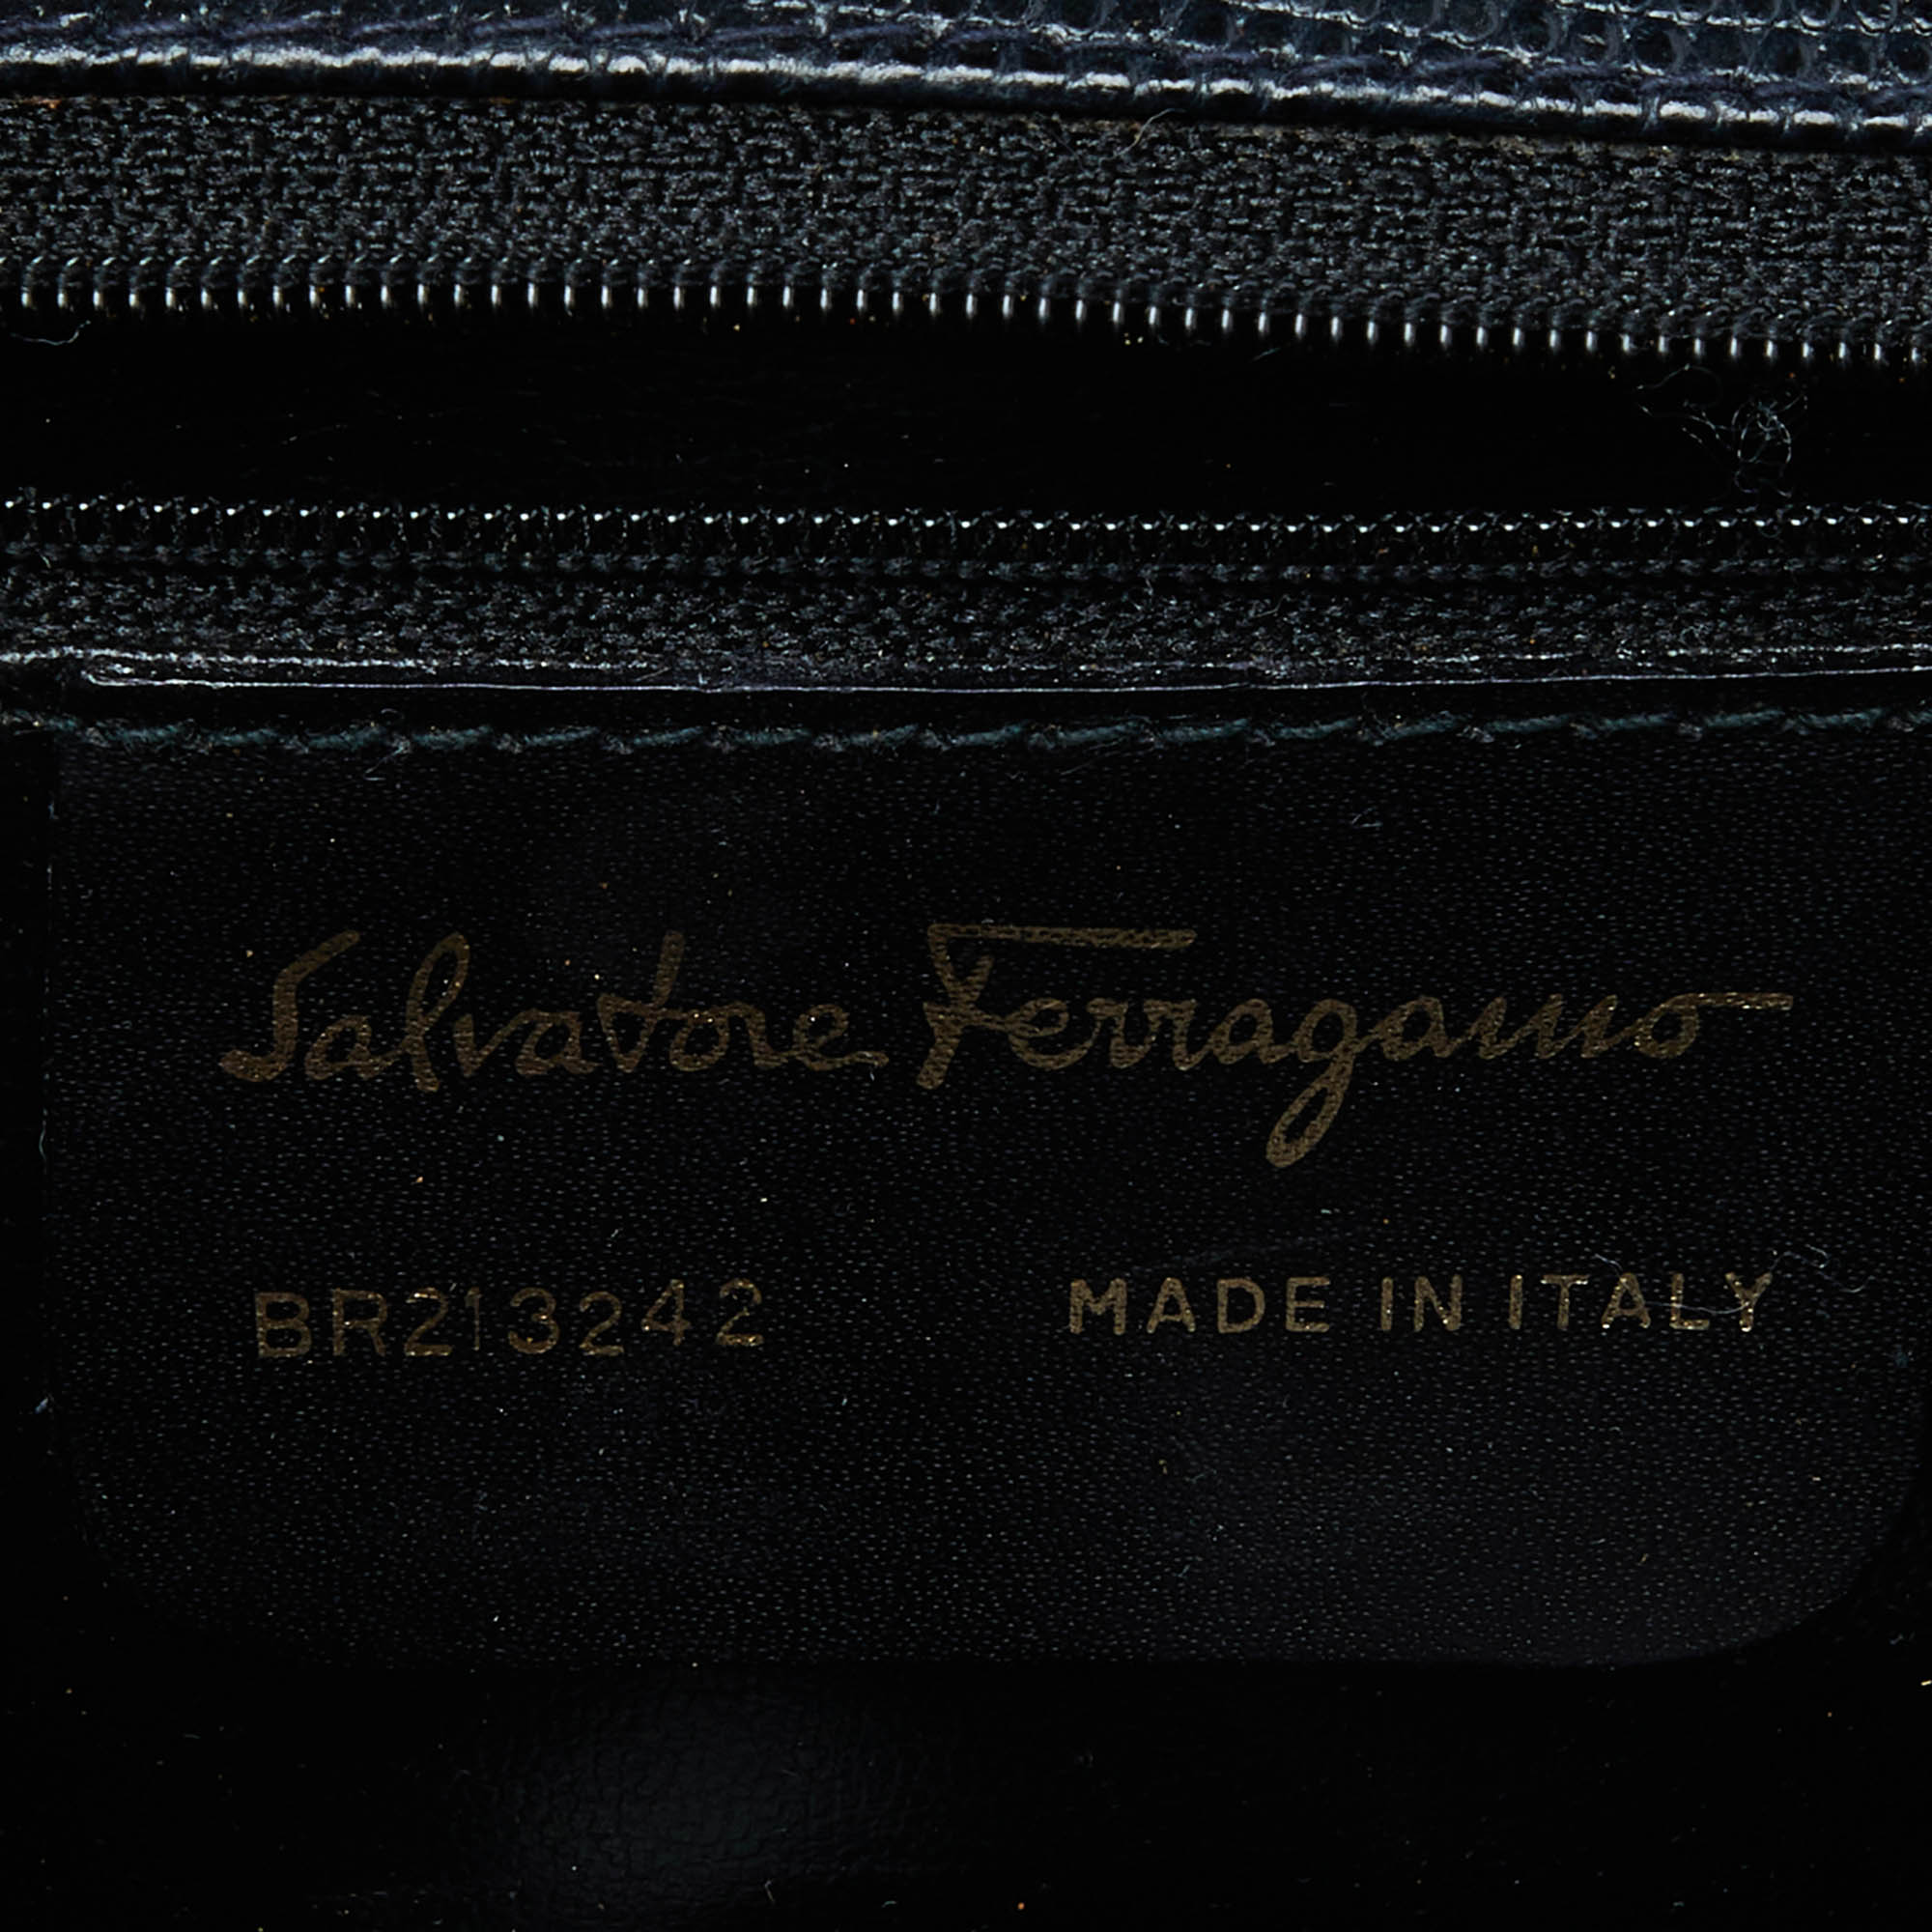 Salvatore Ferragamo Navy Blue Lizard Embossed Leather Gancini Flap Crossbody Bag